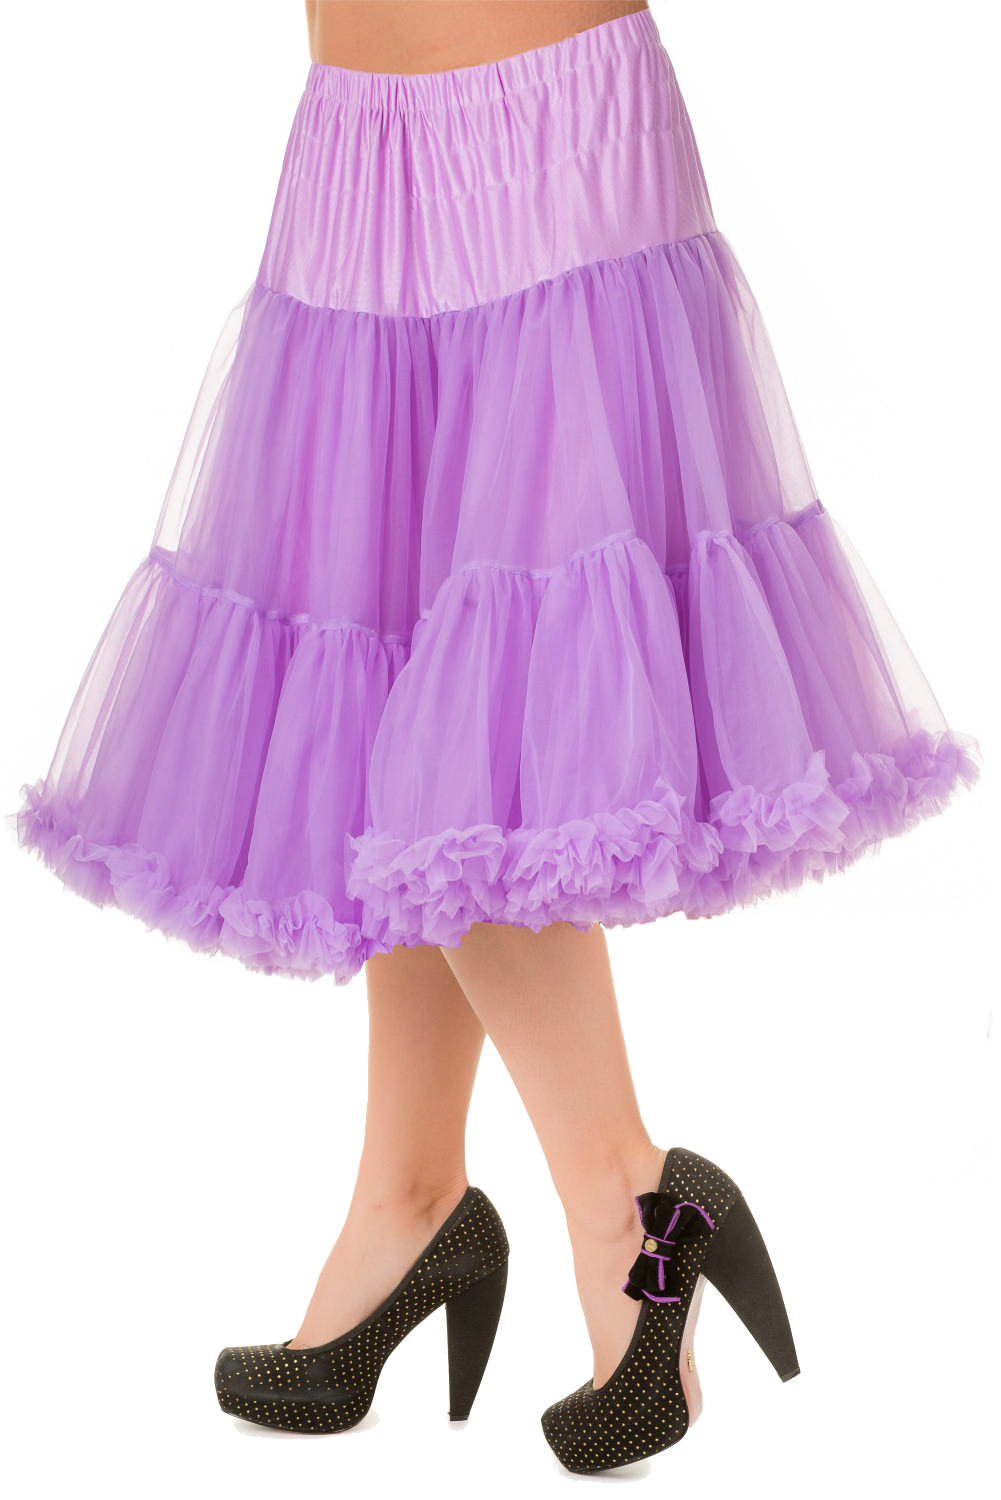 Banned Retro 50s Lizzy Lifeforms Lavender Petticoat